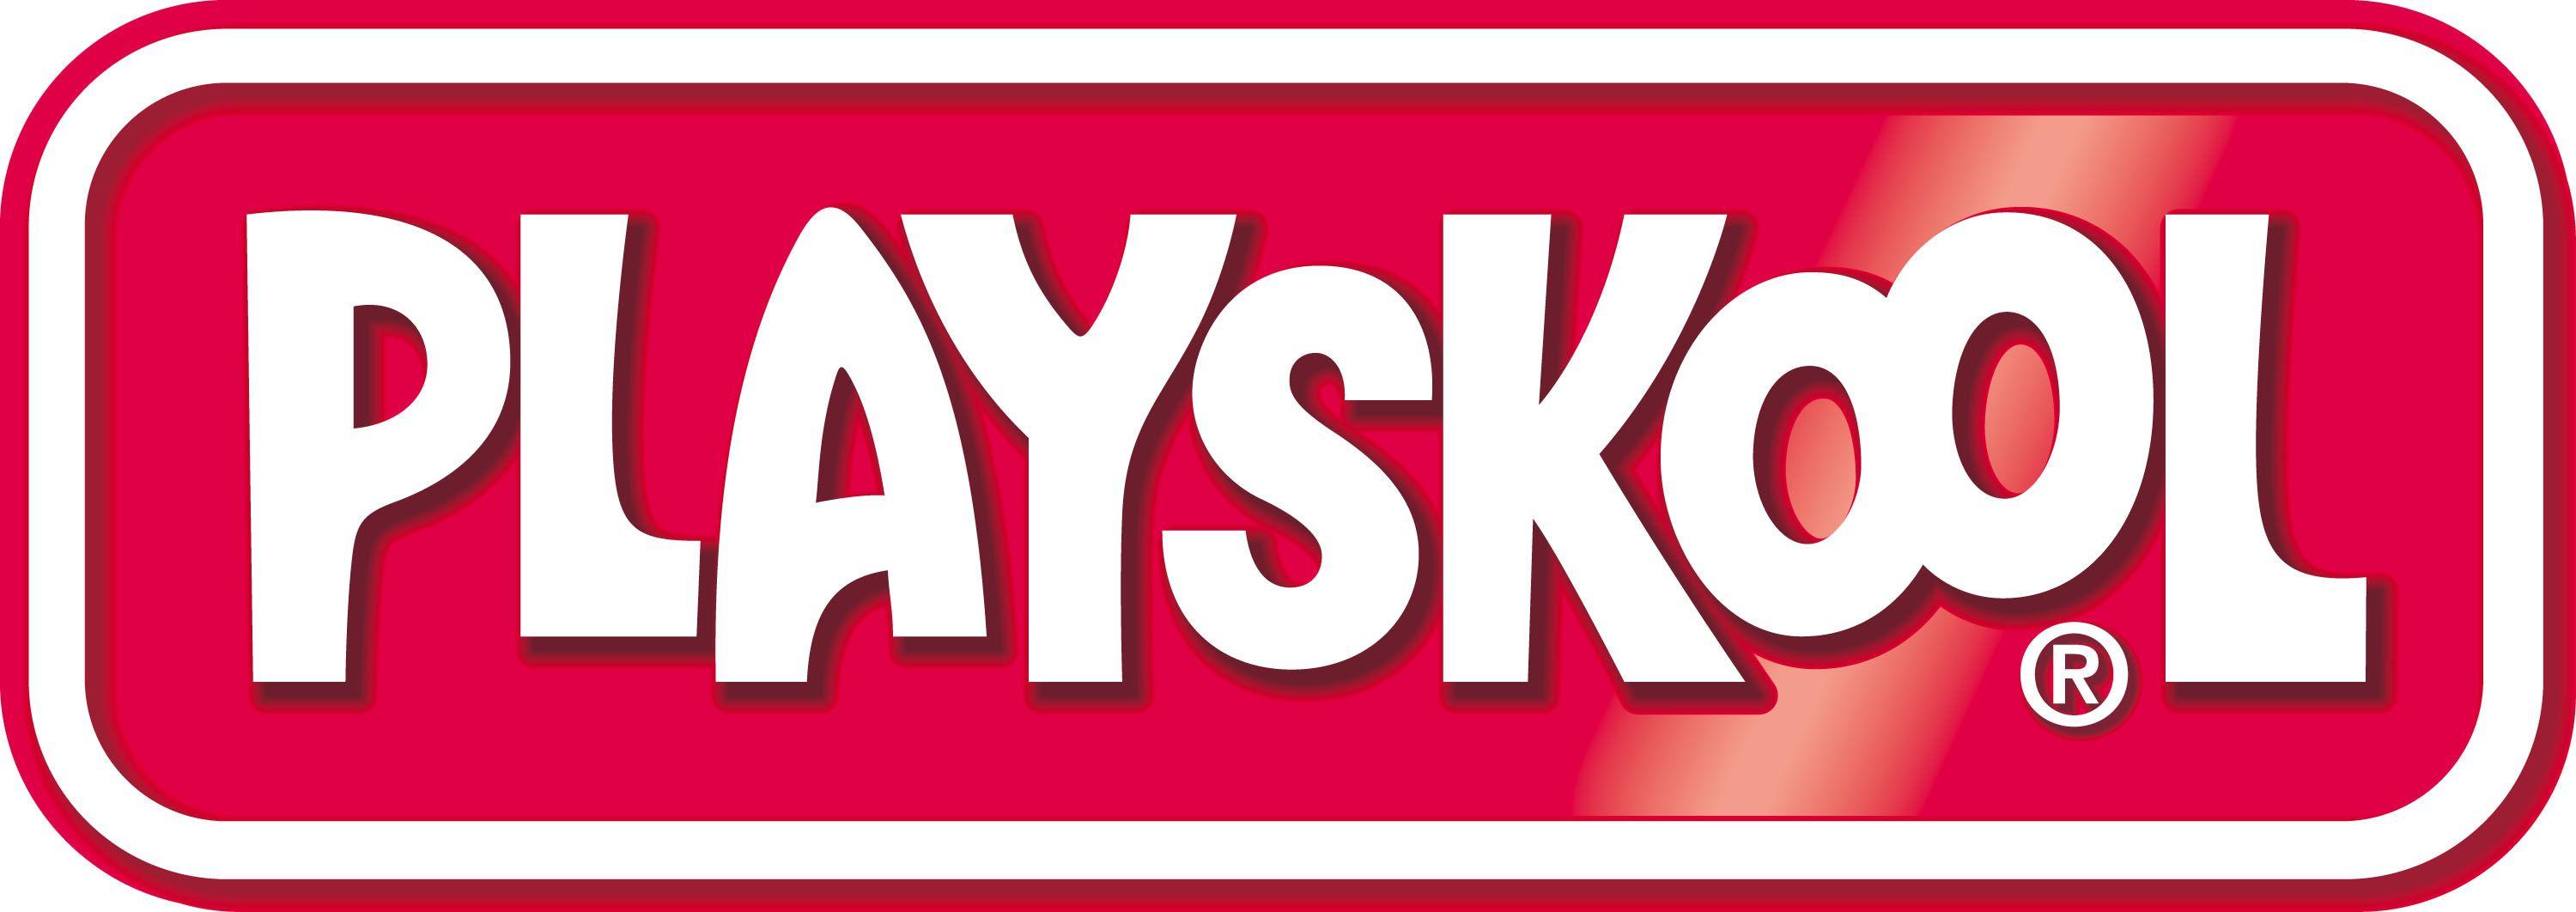 Playskool Logo - Transformers News Reviews Movies Comics and Toys